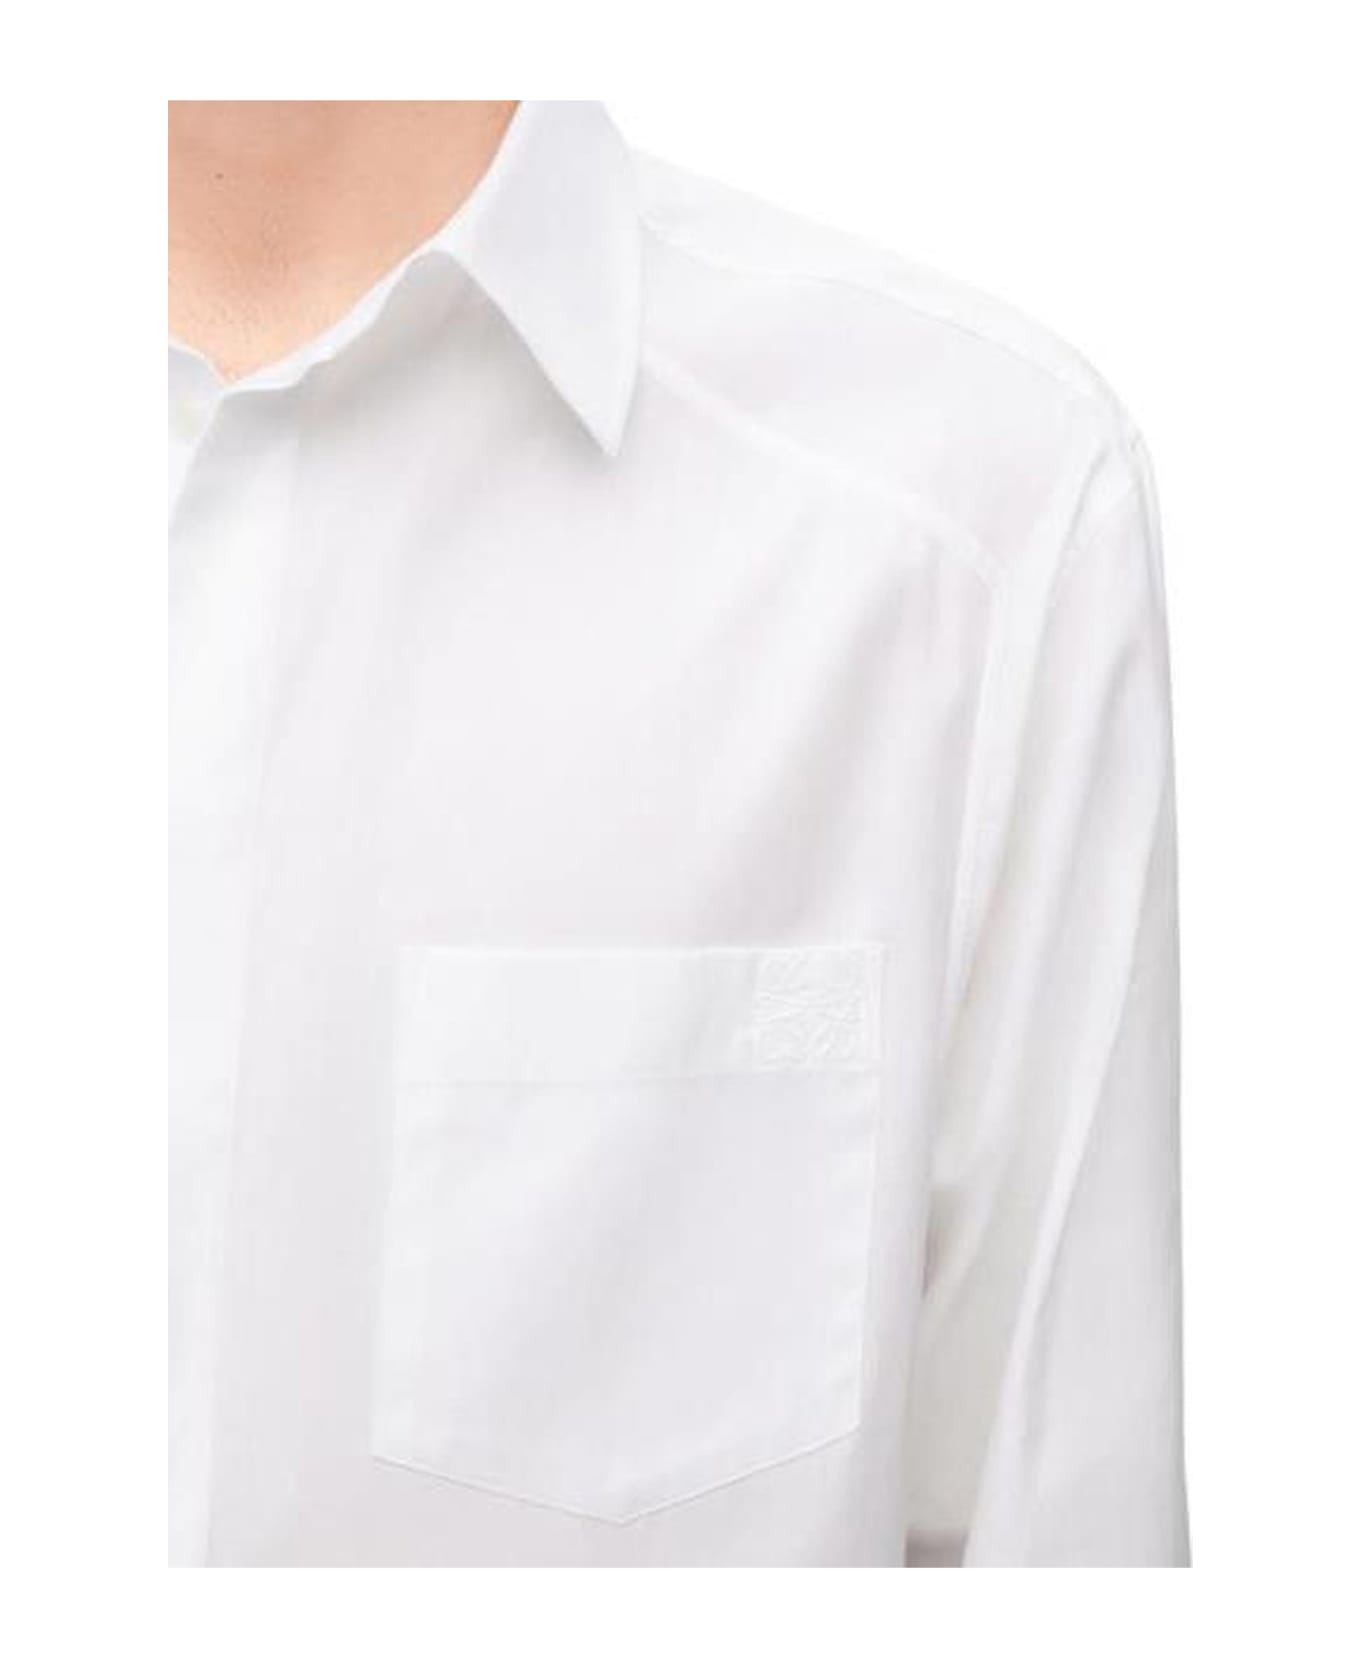 Loewe Asymmetric Shirt - White